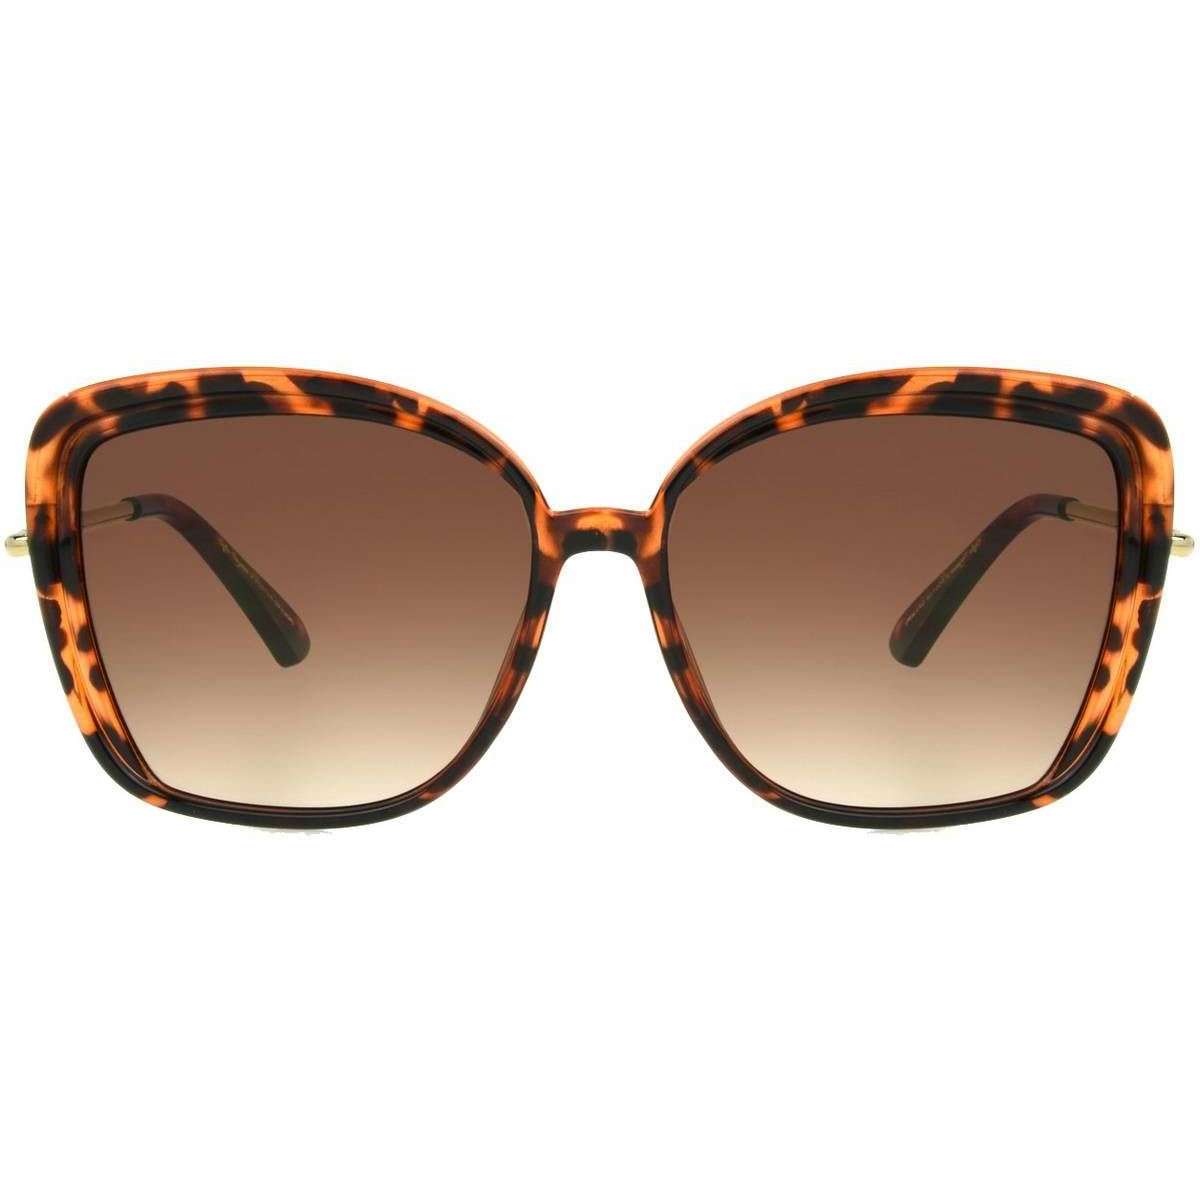 Sofia Vergara Celia Glam Square Sunglasses - Amber Brown Tort